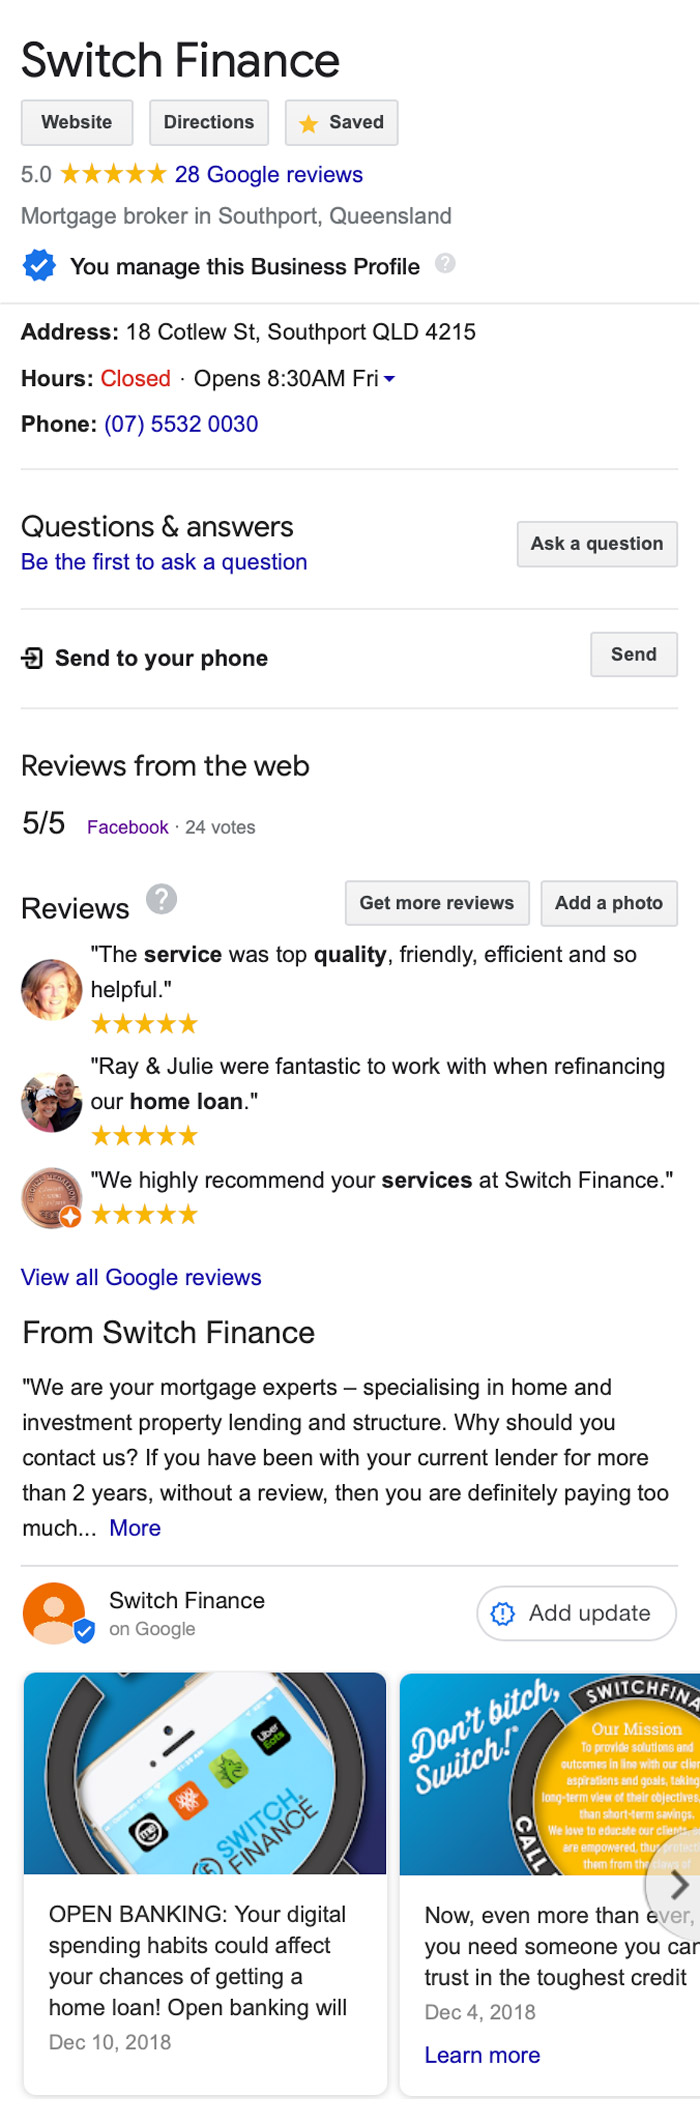 Switch Finance Google Business Set Up